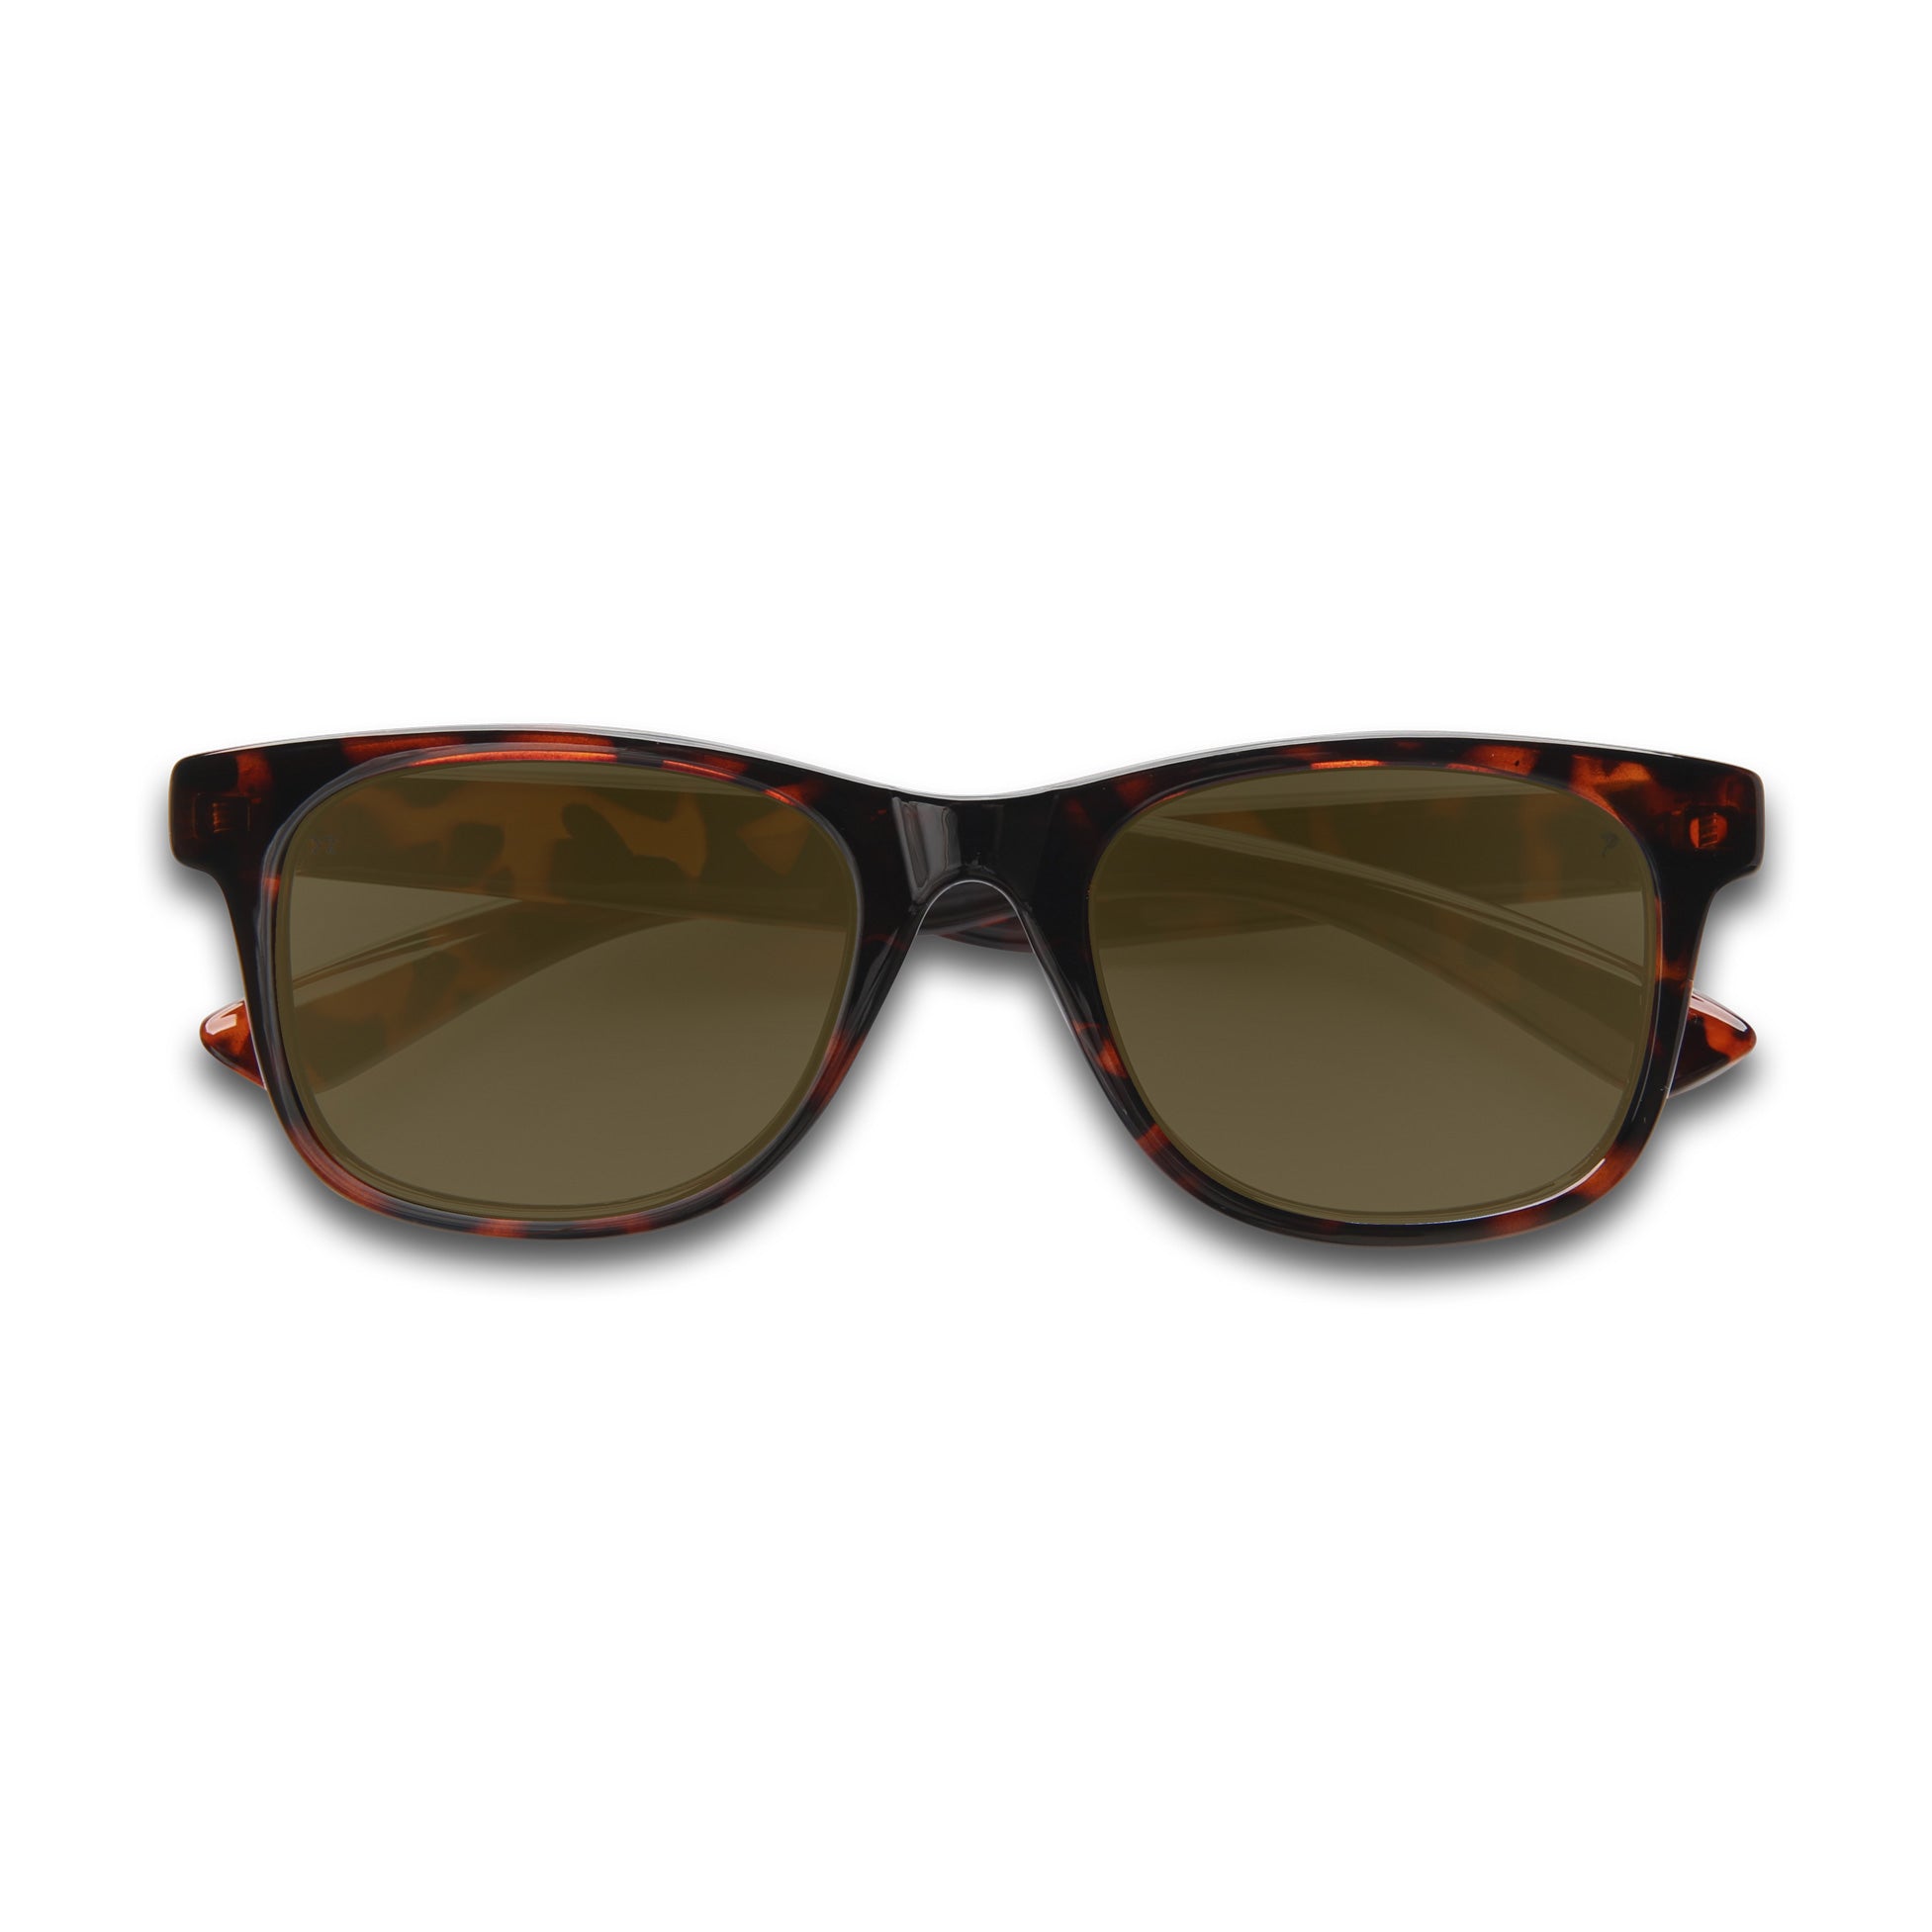 Kidz - Floating Sunglasses KZ Tortoise / Brown